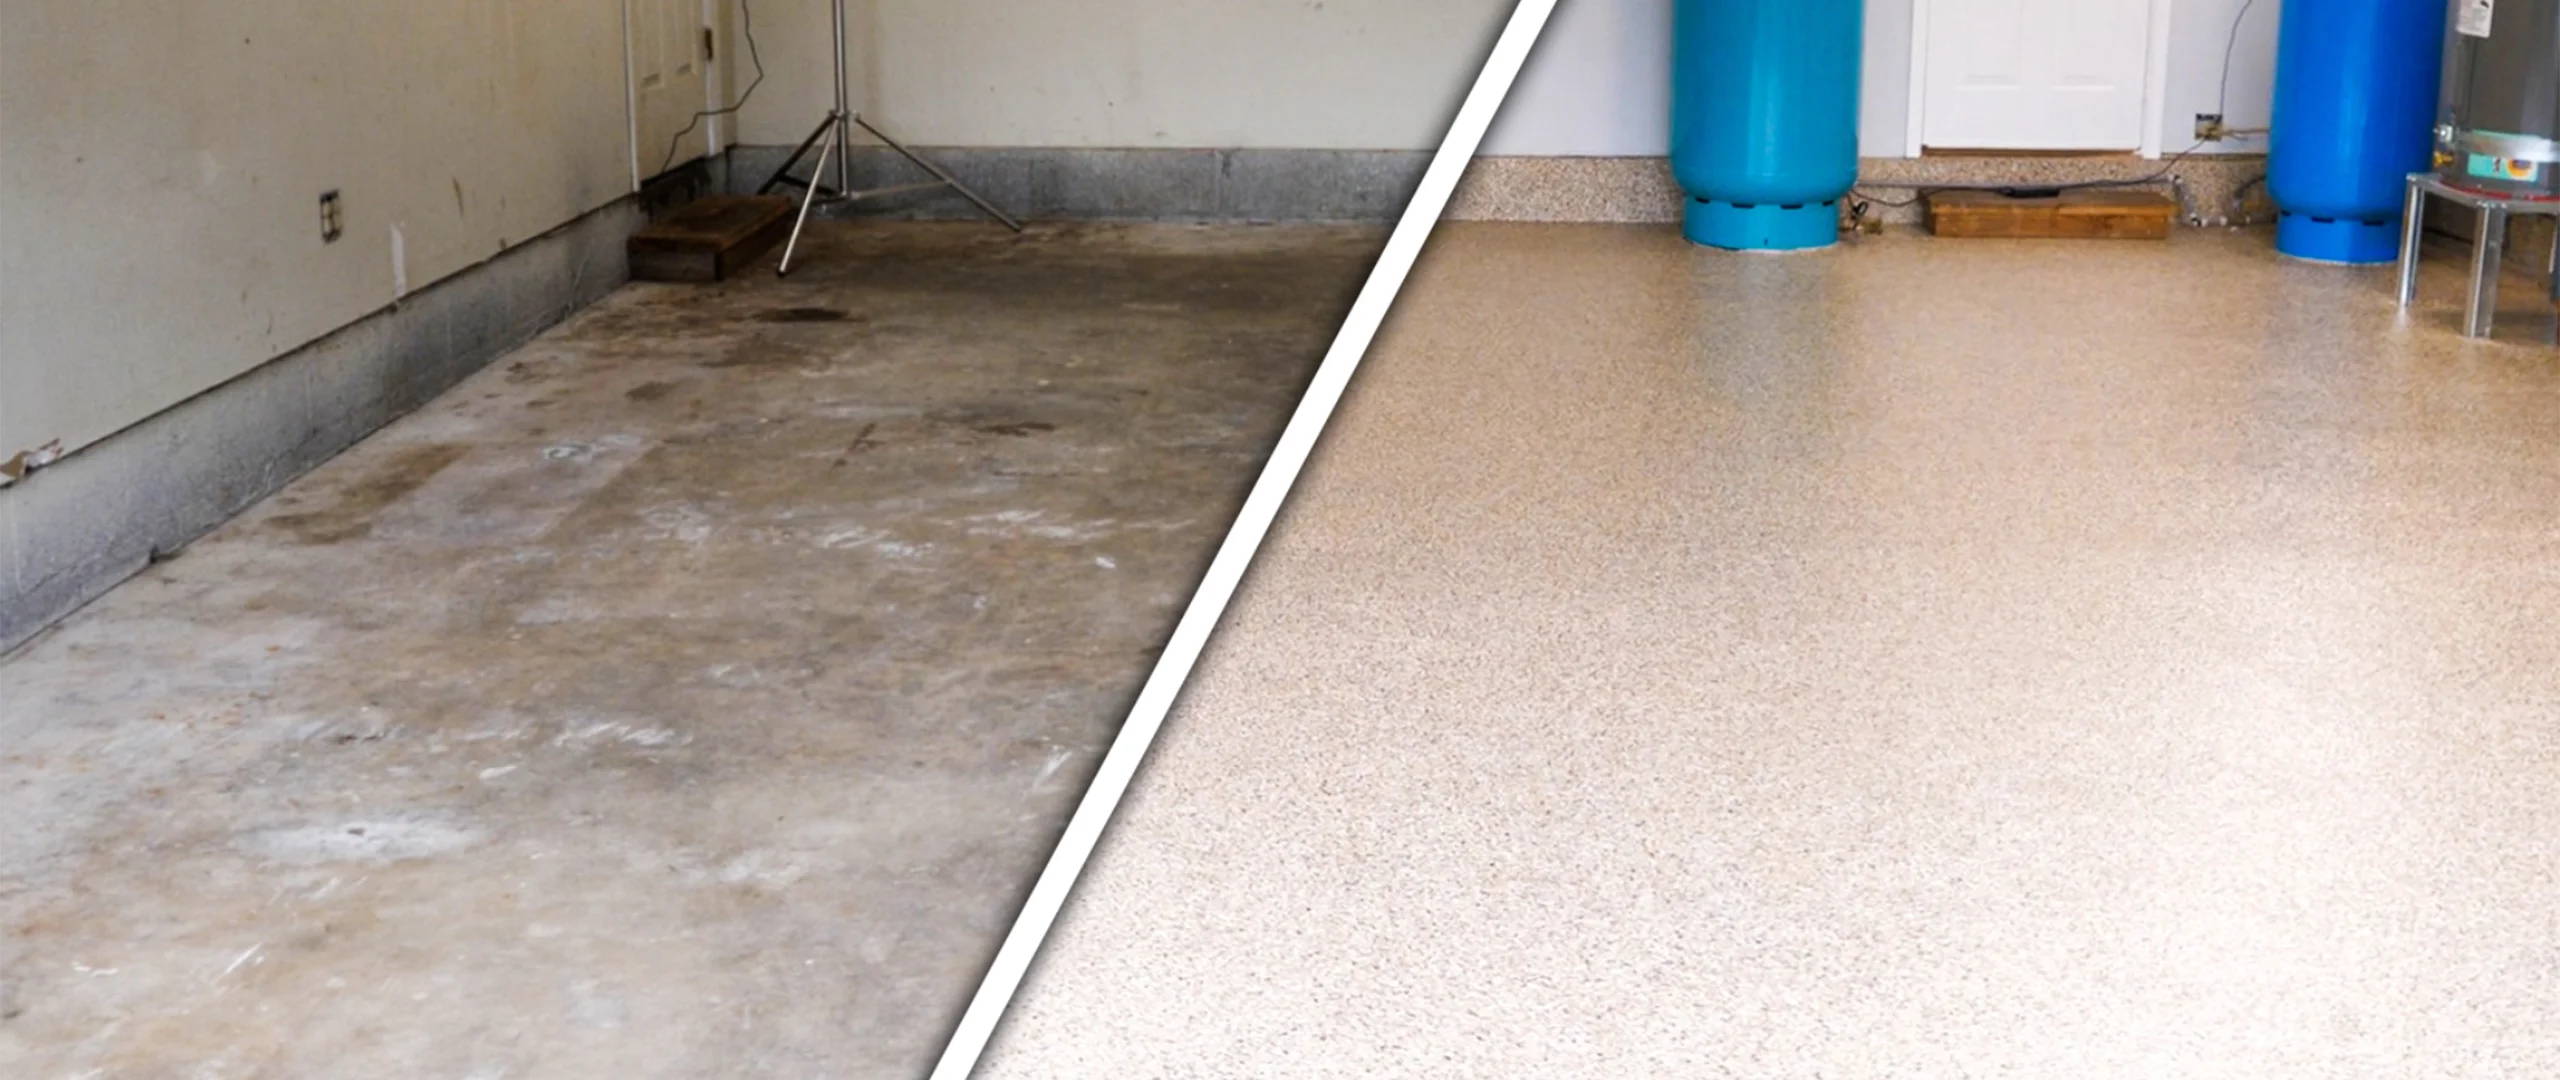 DIY tutorial on preparing a worn-out garage floor for Stone Coats’ Epoxy Flake Flooring System.